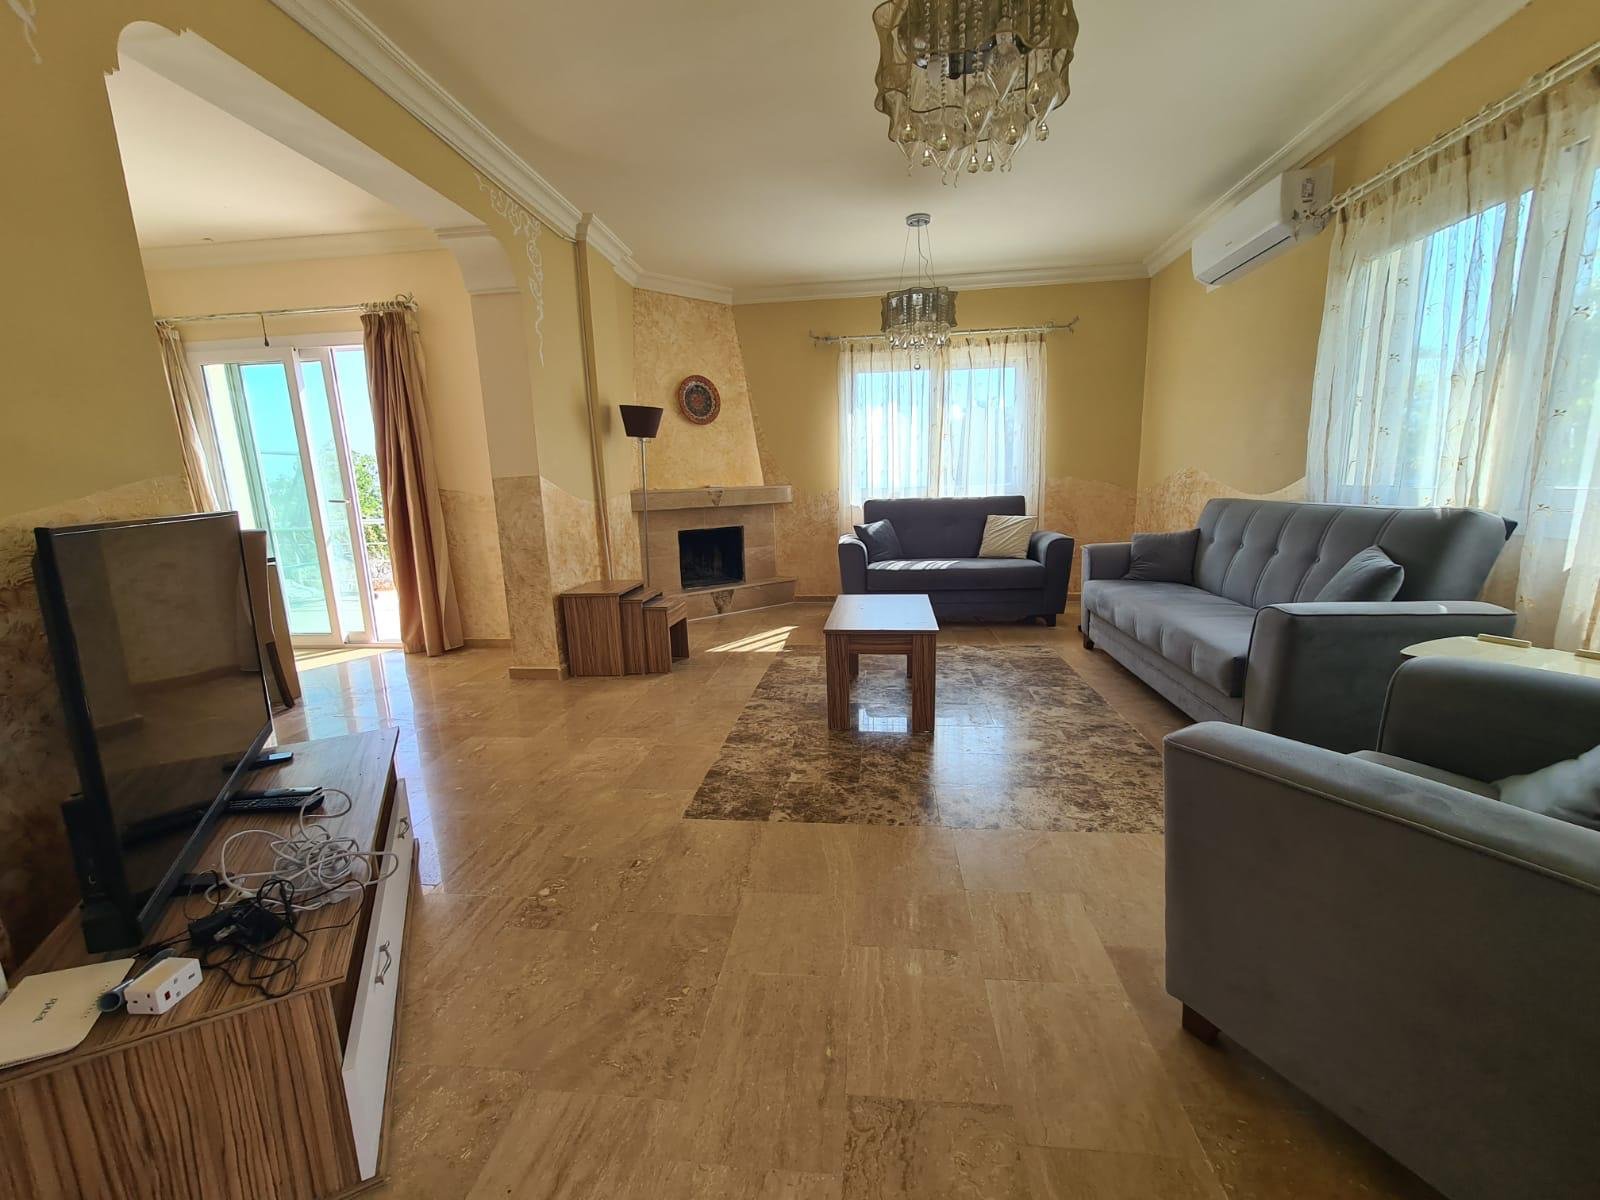 3 bedroom villa for sale in Kyrenia, Karshiyaka-ae28c8a5-240b-4252-8ccd-2063b7449e48